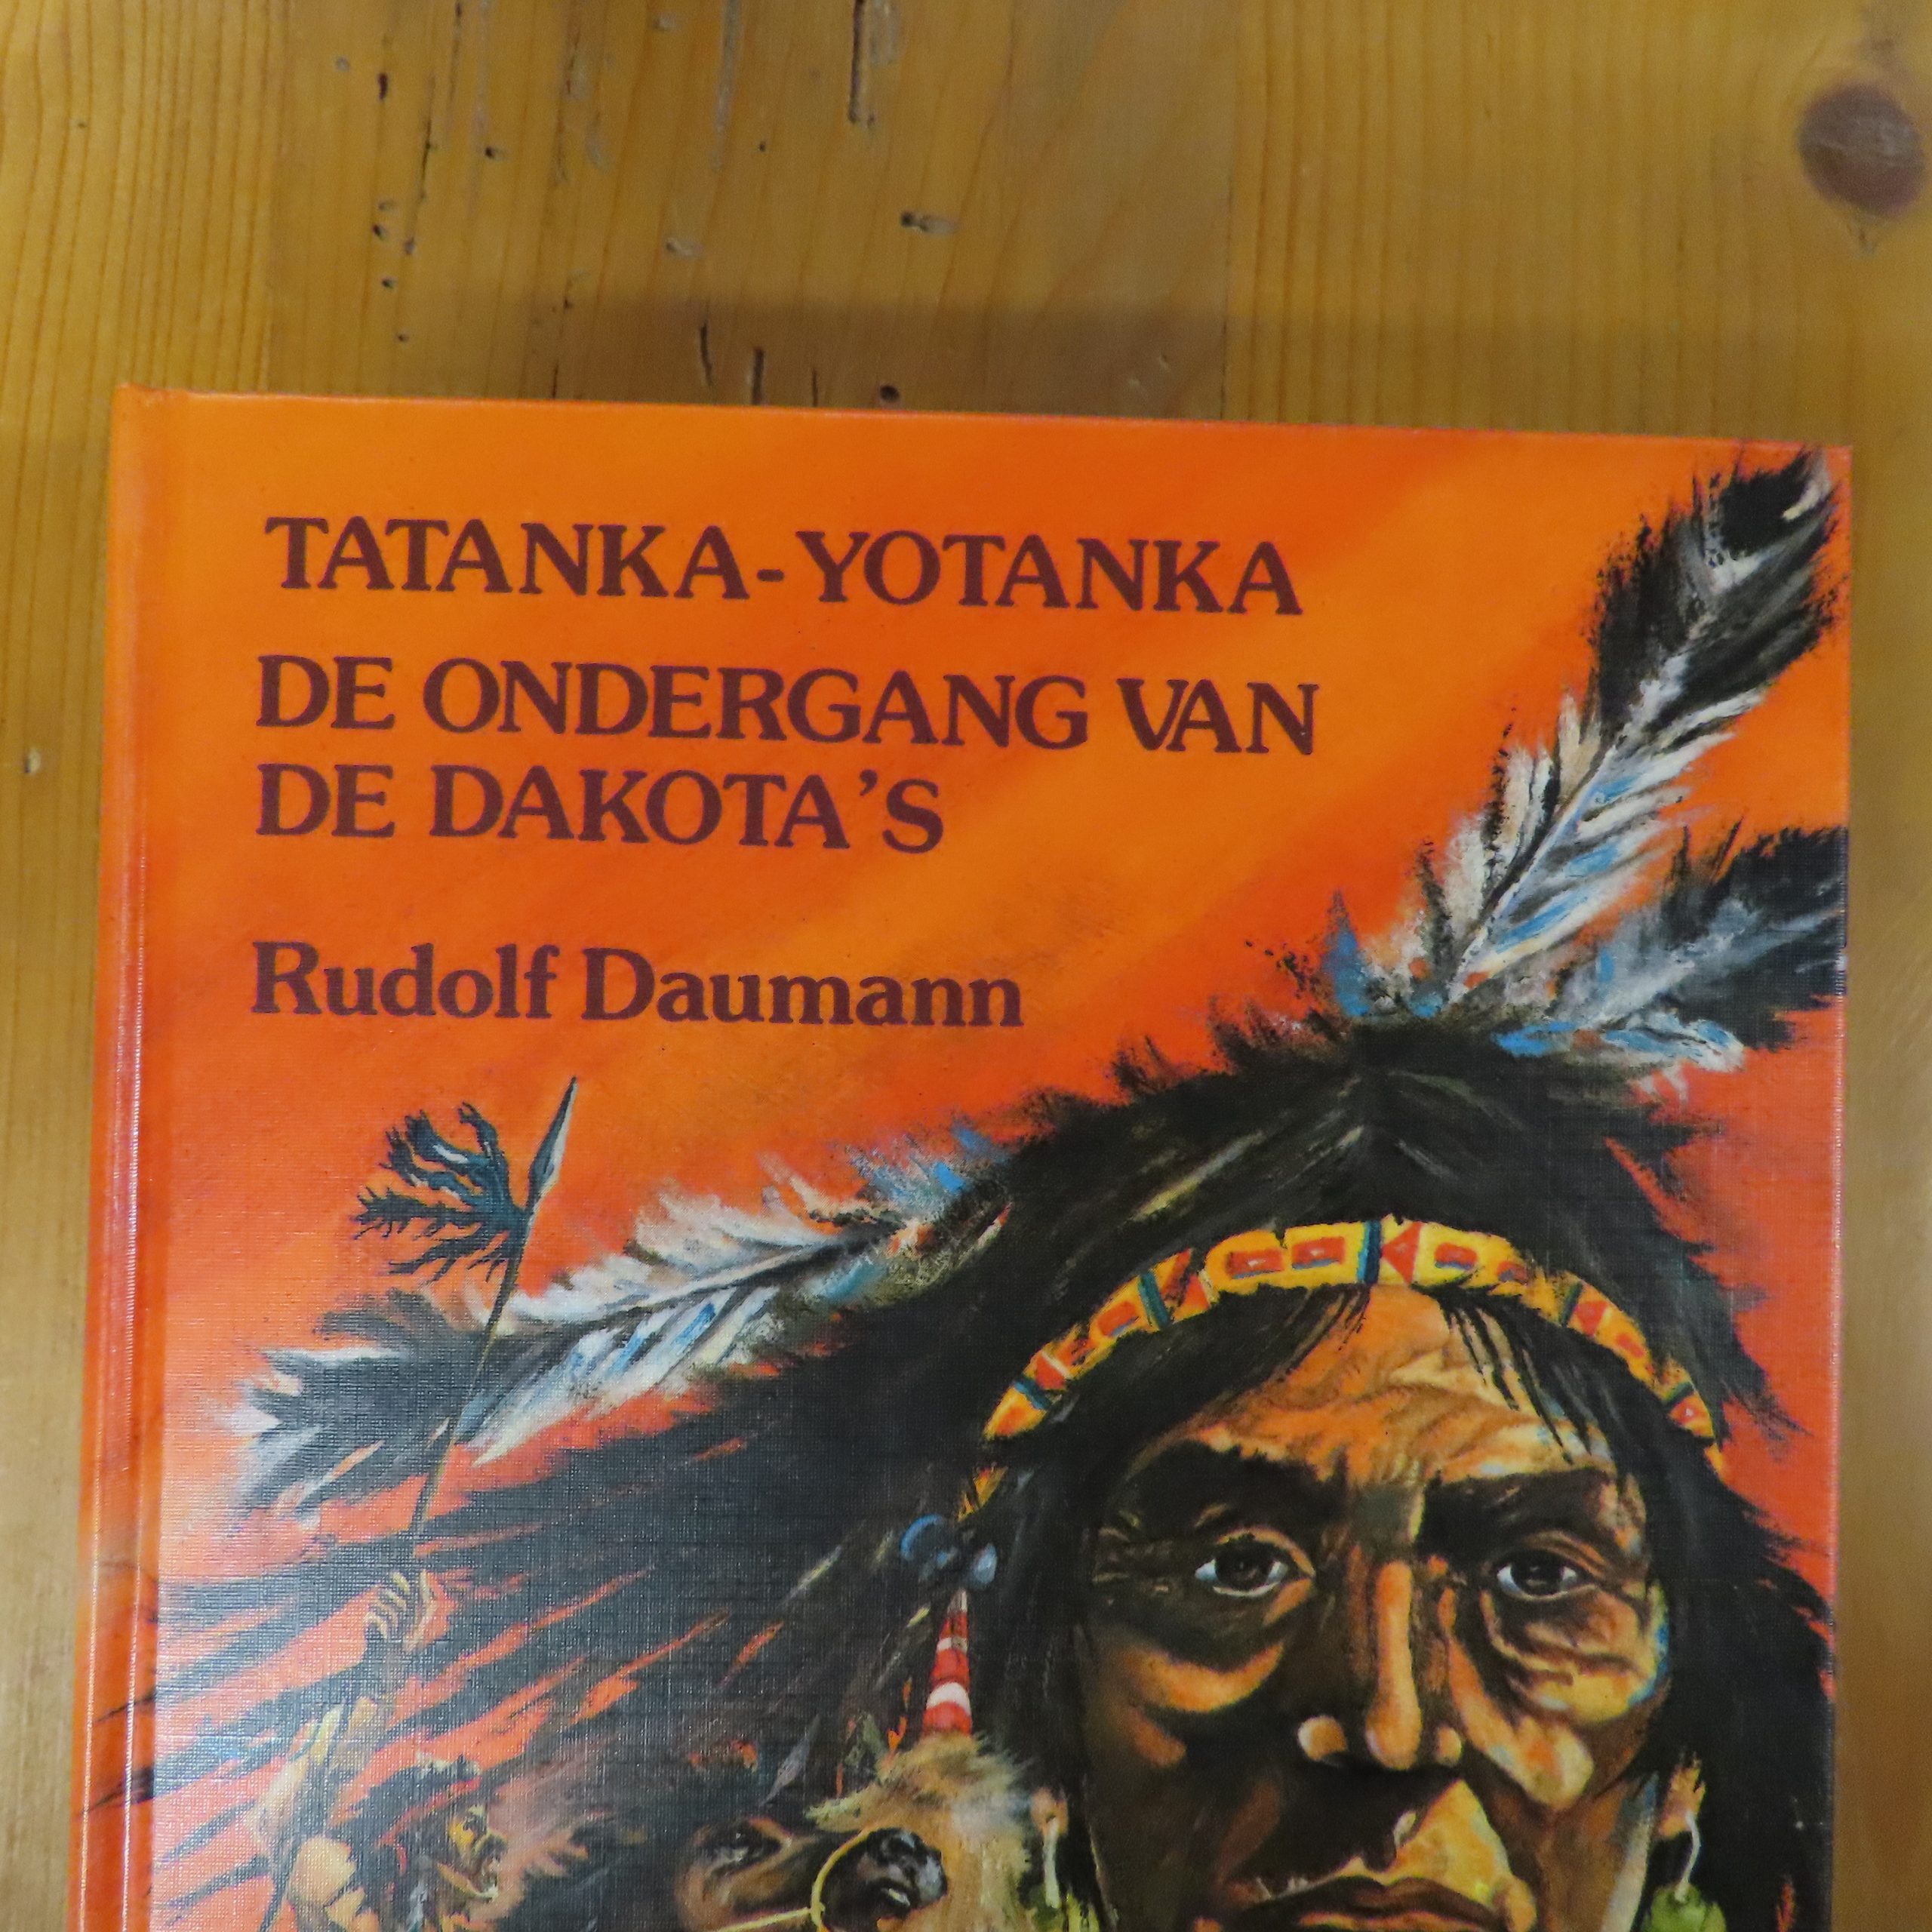 Boek “Tatanka Yotanka-ondergang van de Dakota’s” van Rudolf Daumann